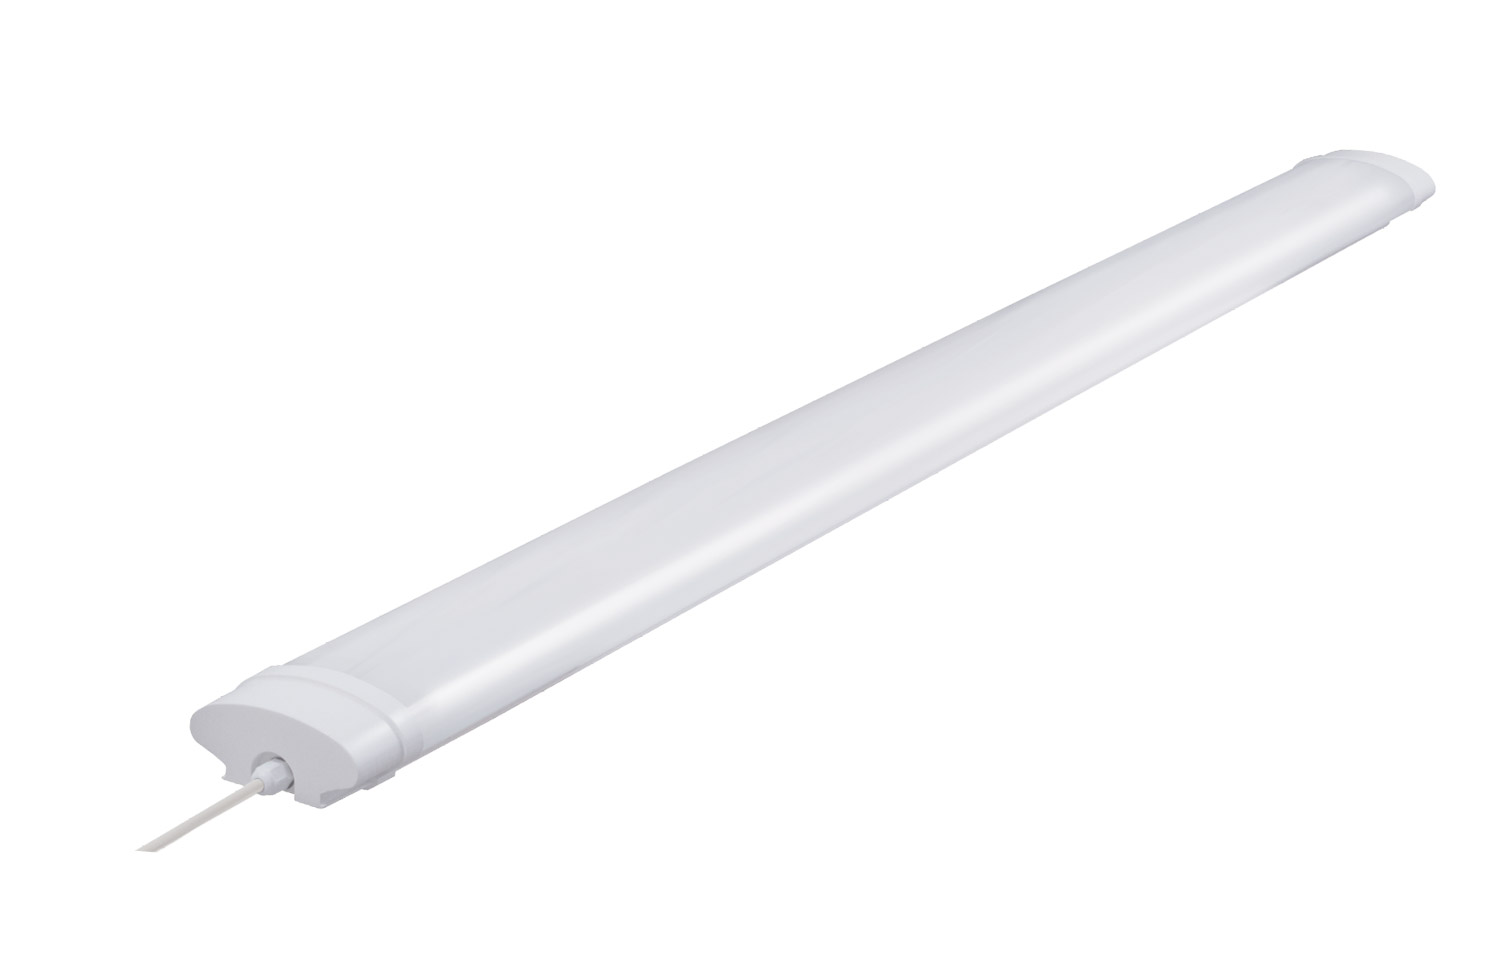 LHT057 Waterproof LED Linea luminaire